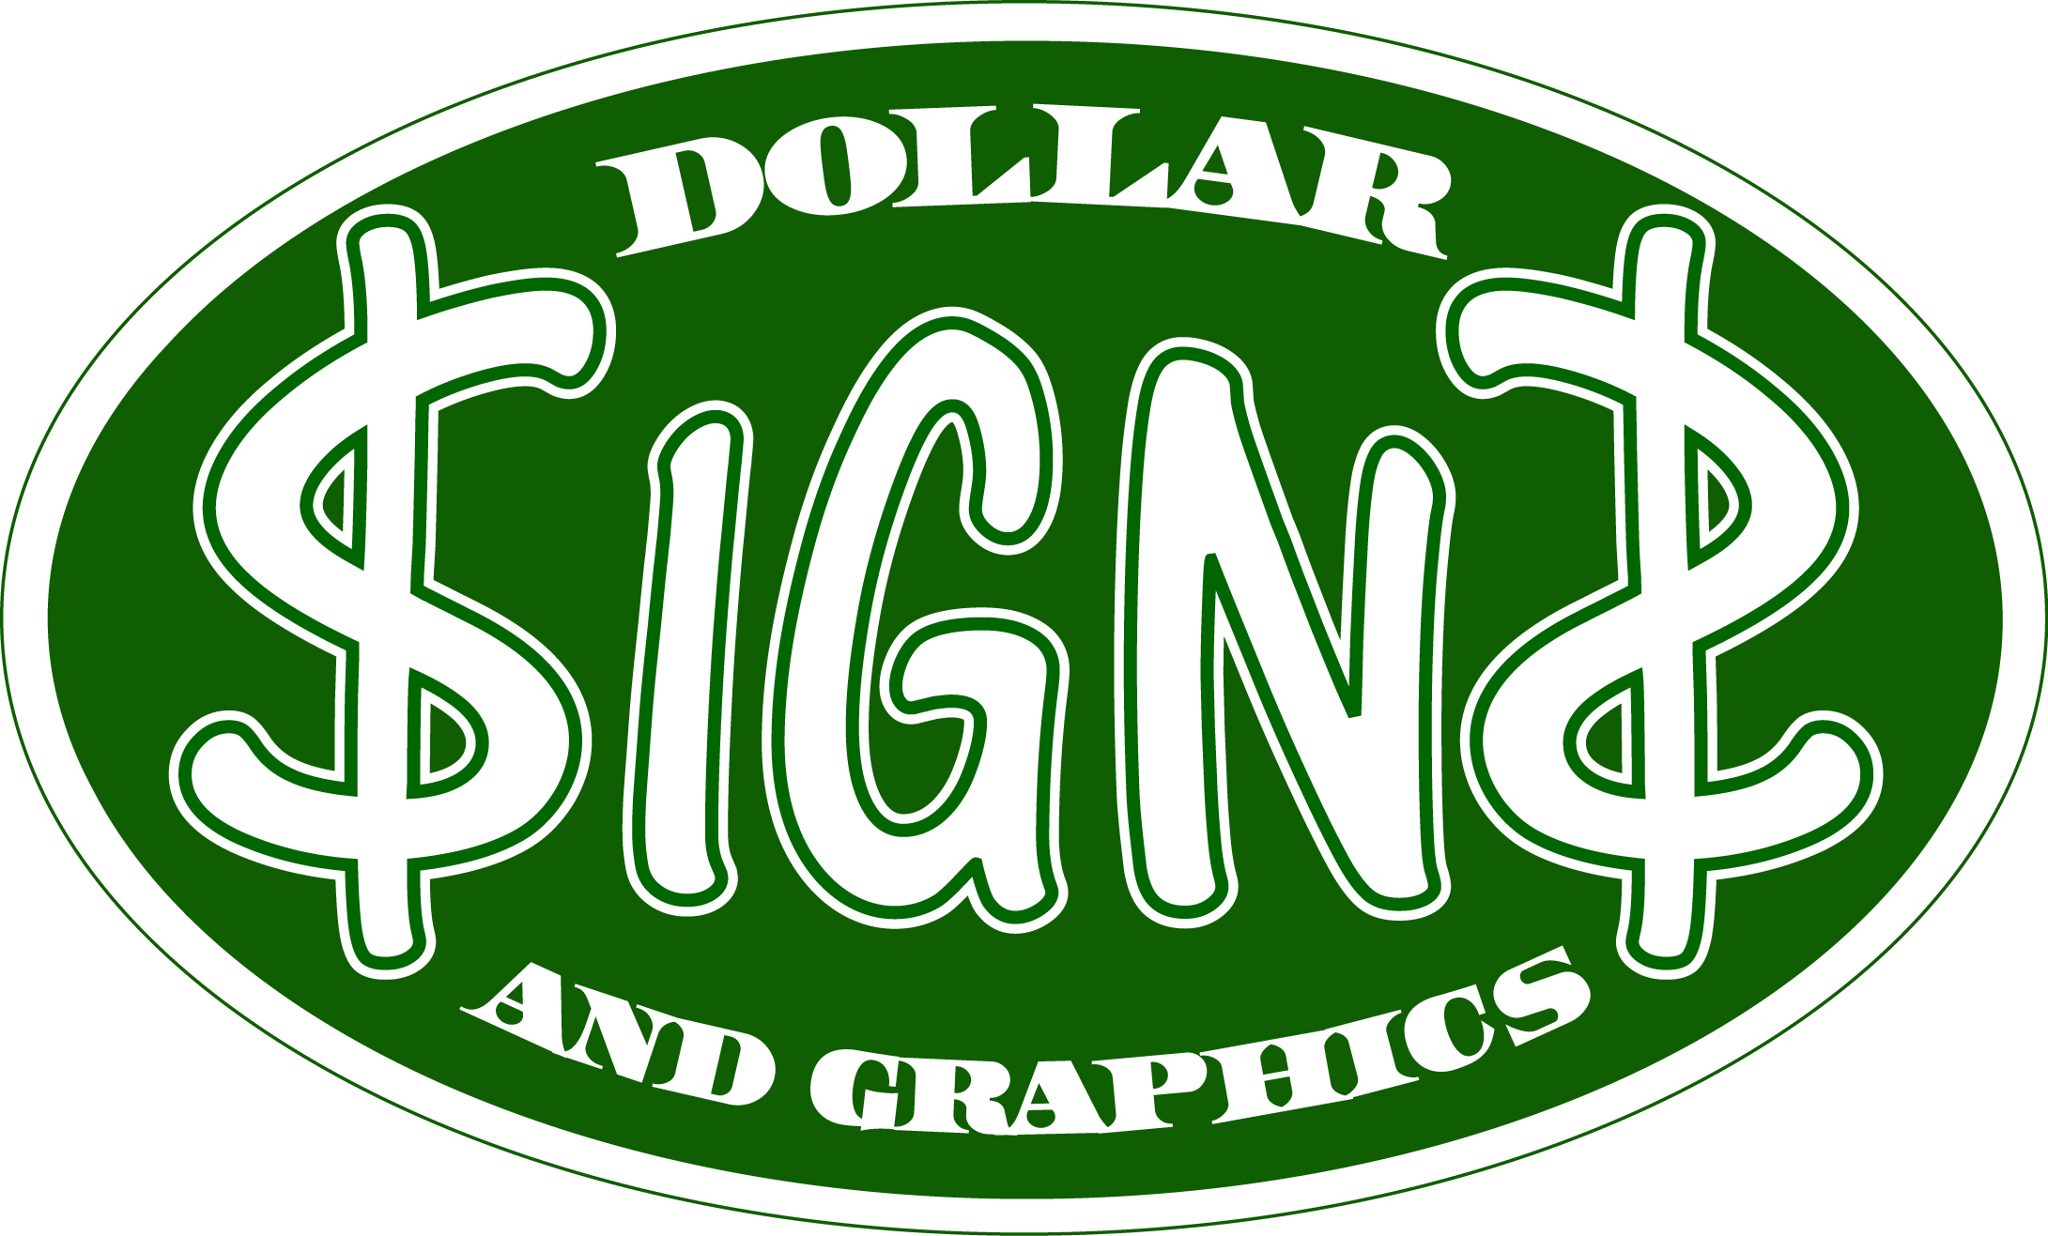 dollar signs